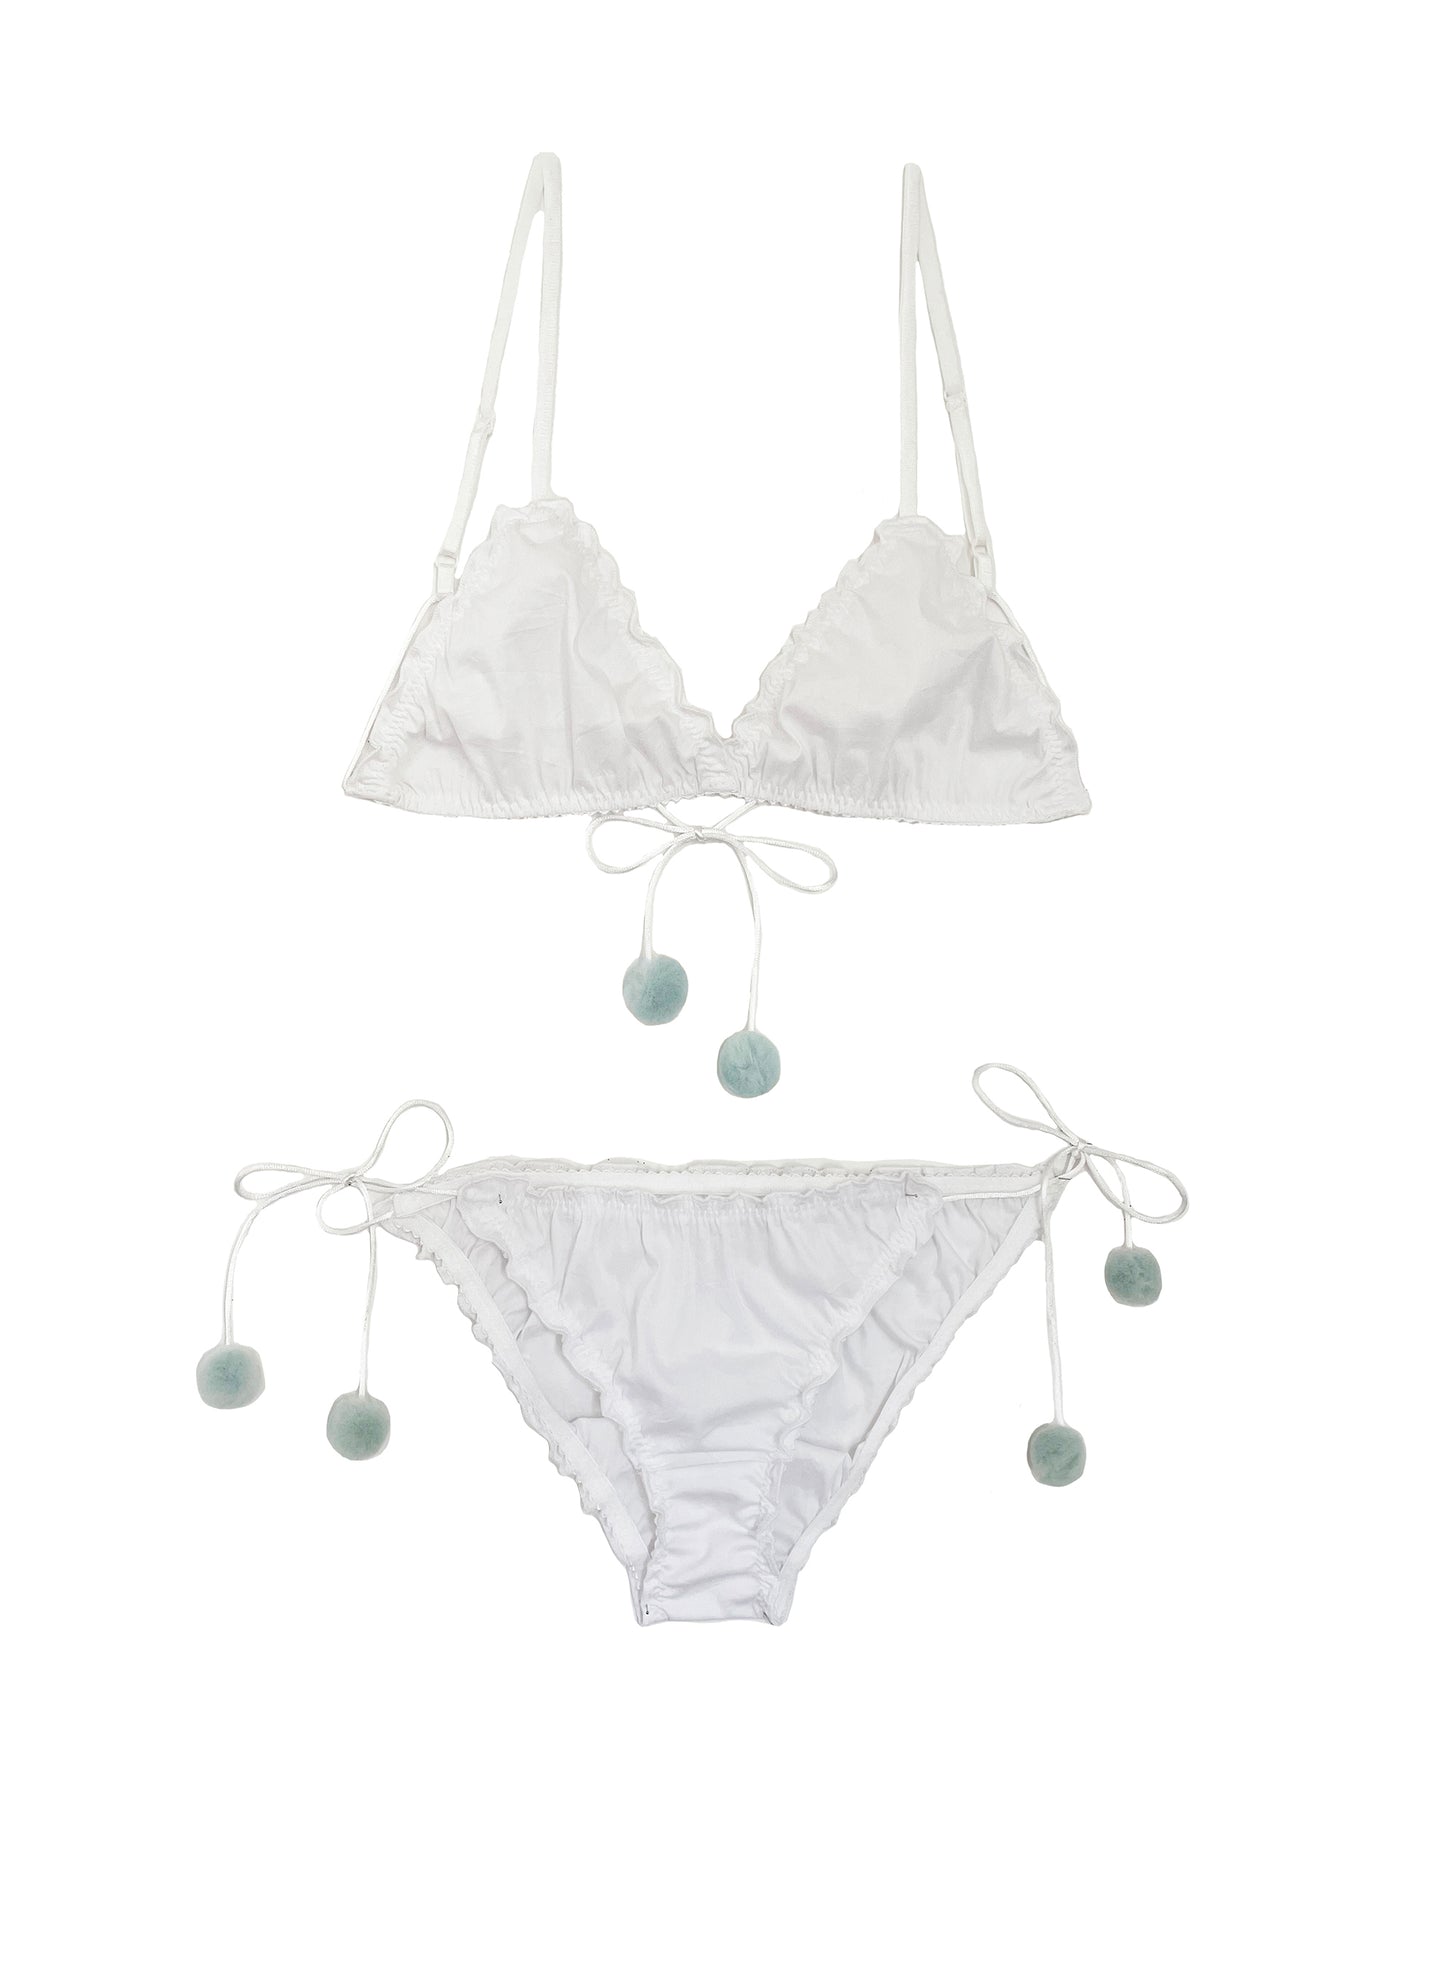 Spirit - white cotton lingerie set